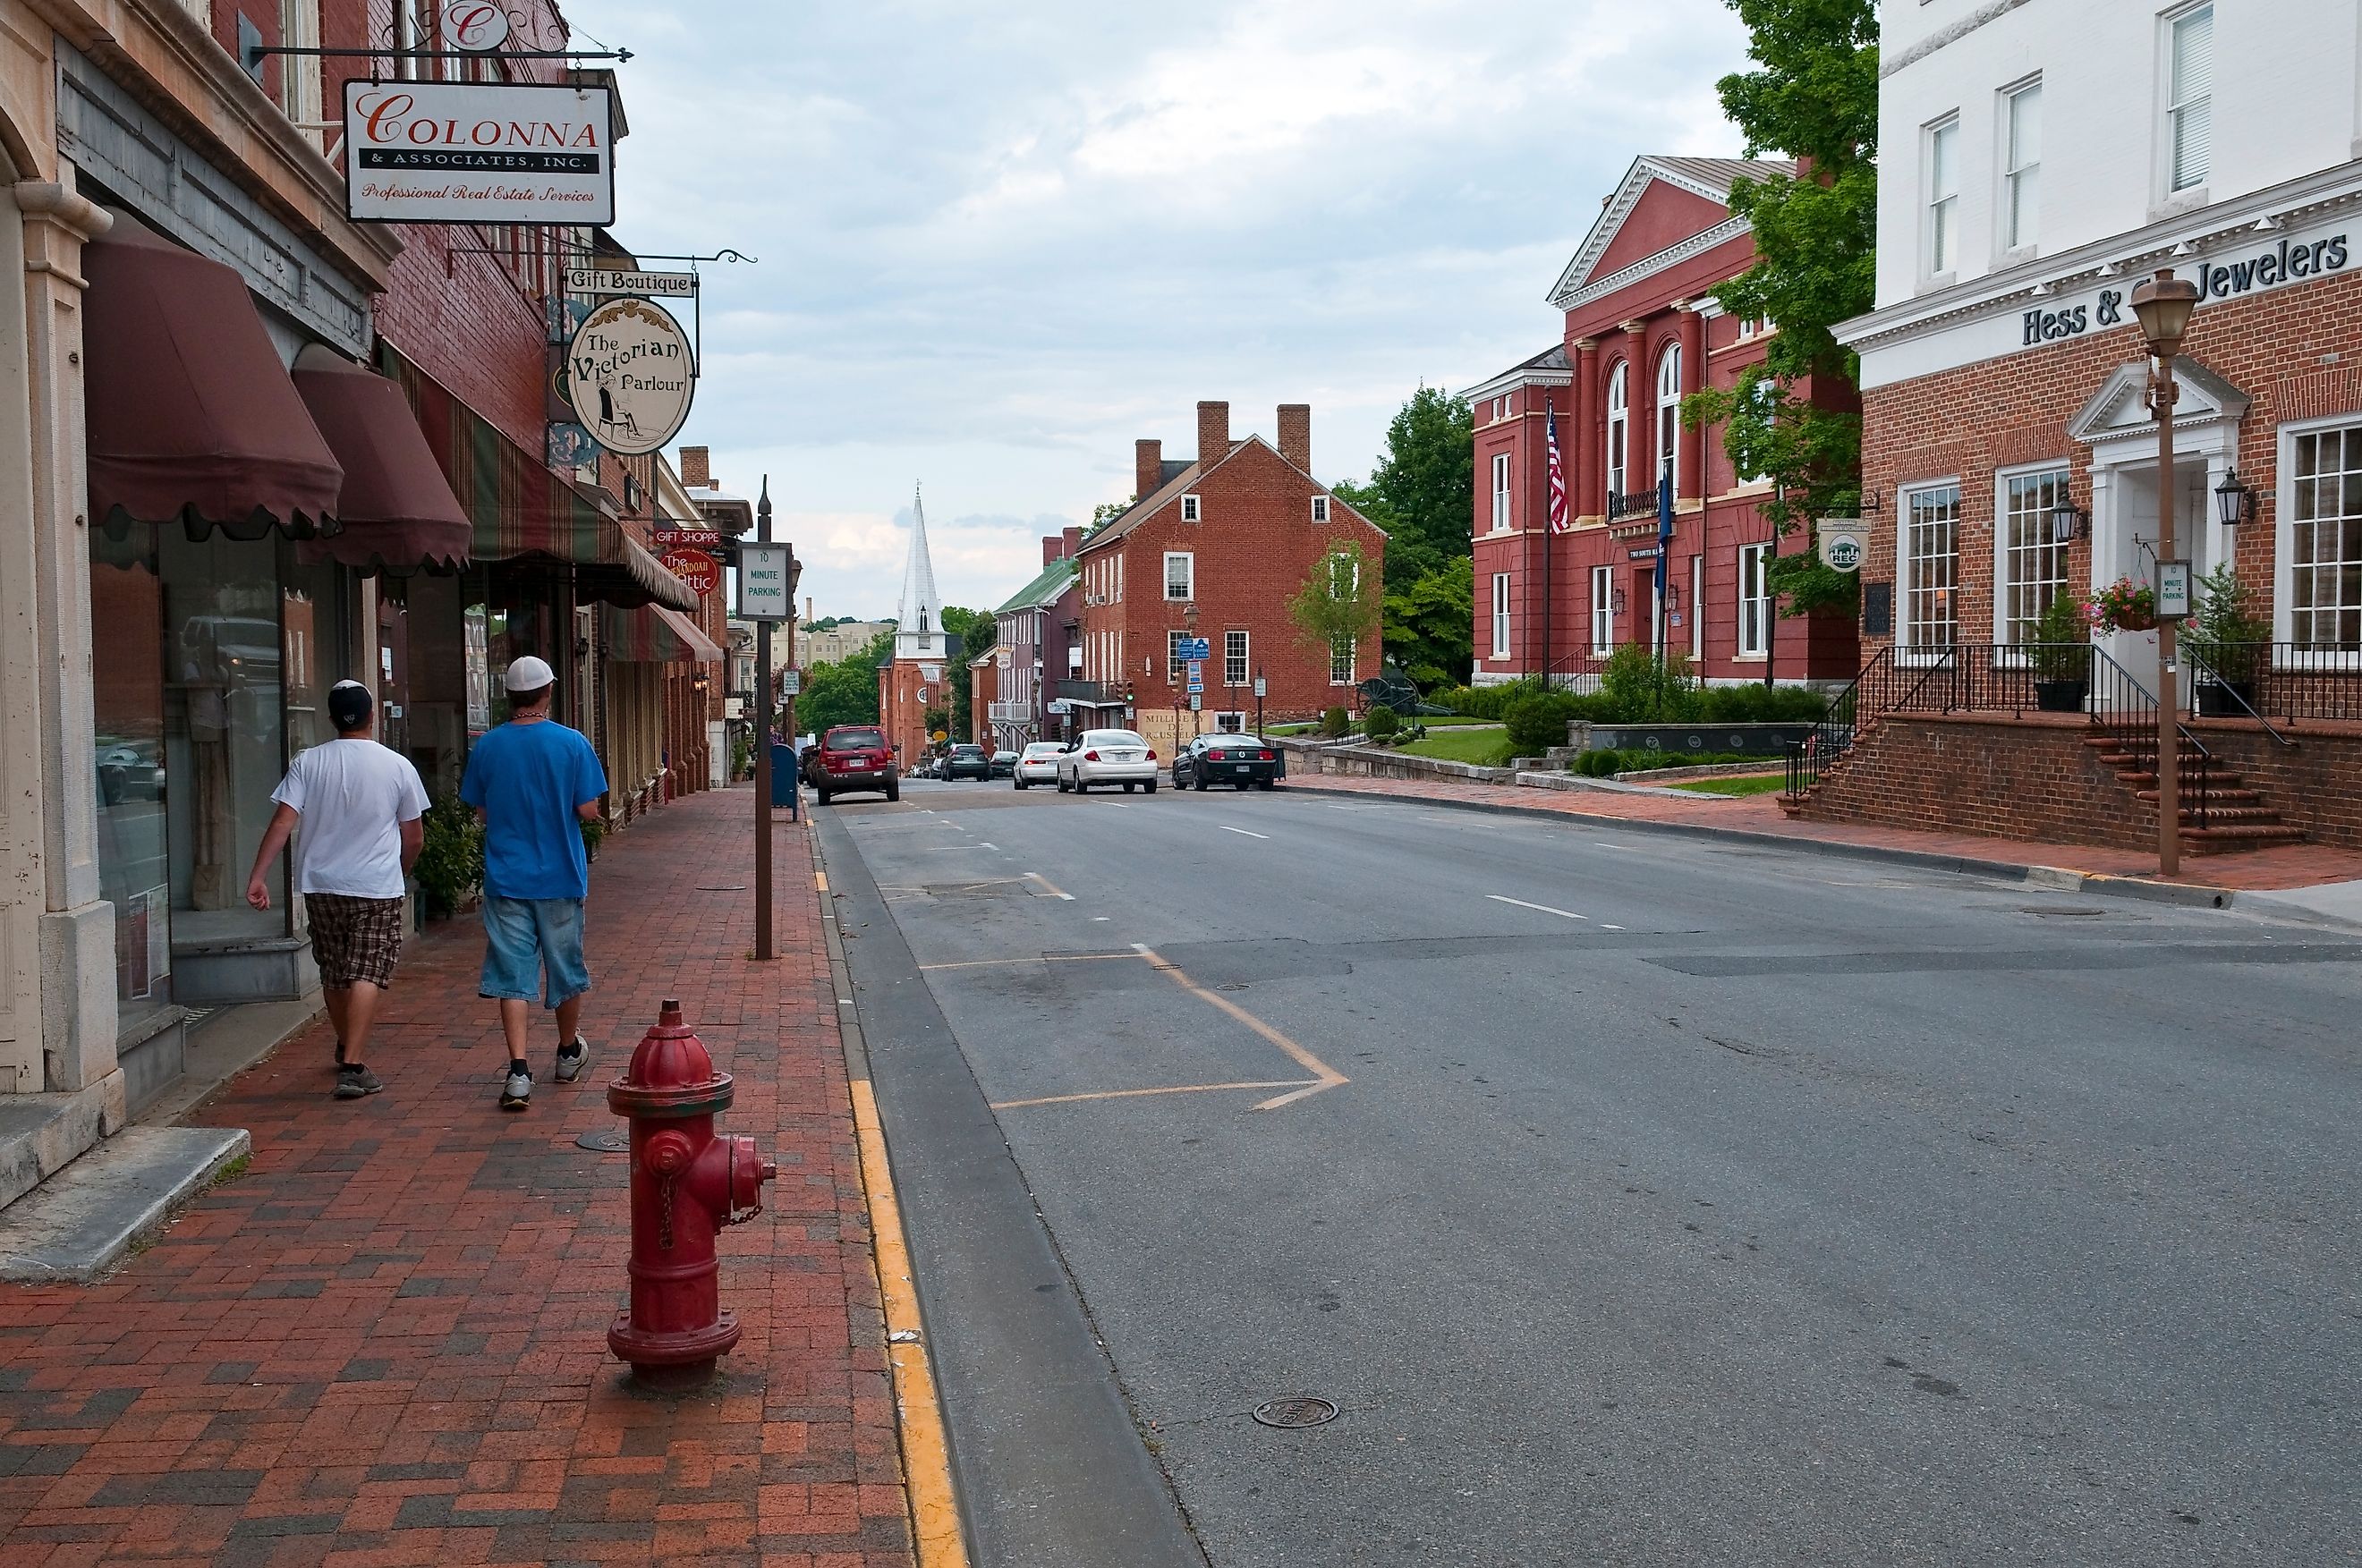 Two young men walk in the business district in historic Lexington, Virginia, via Joel Carillet / iStock.com